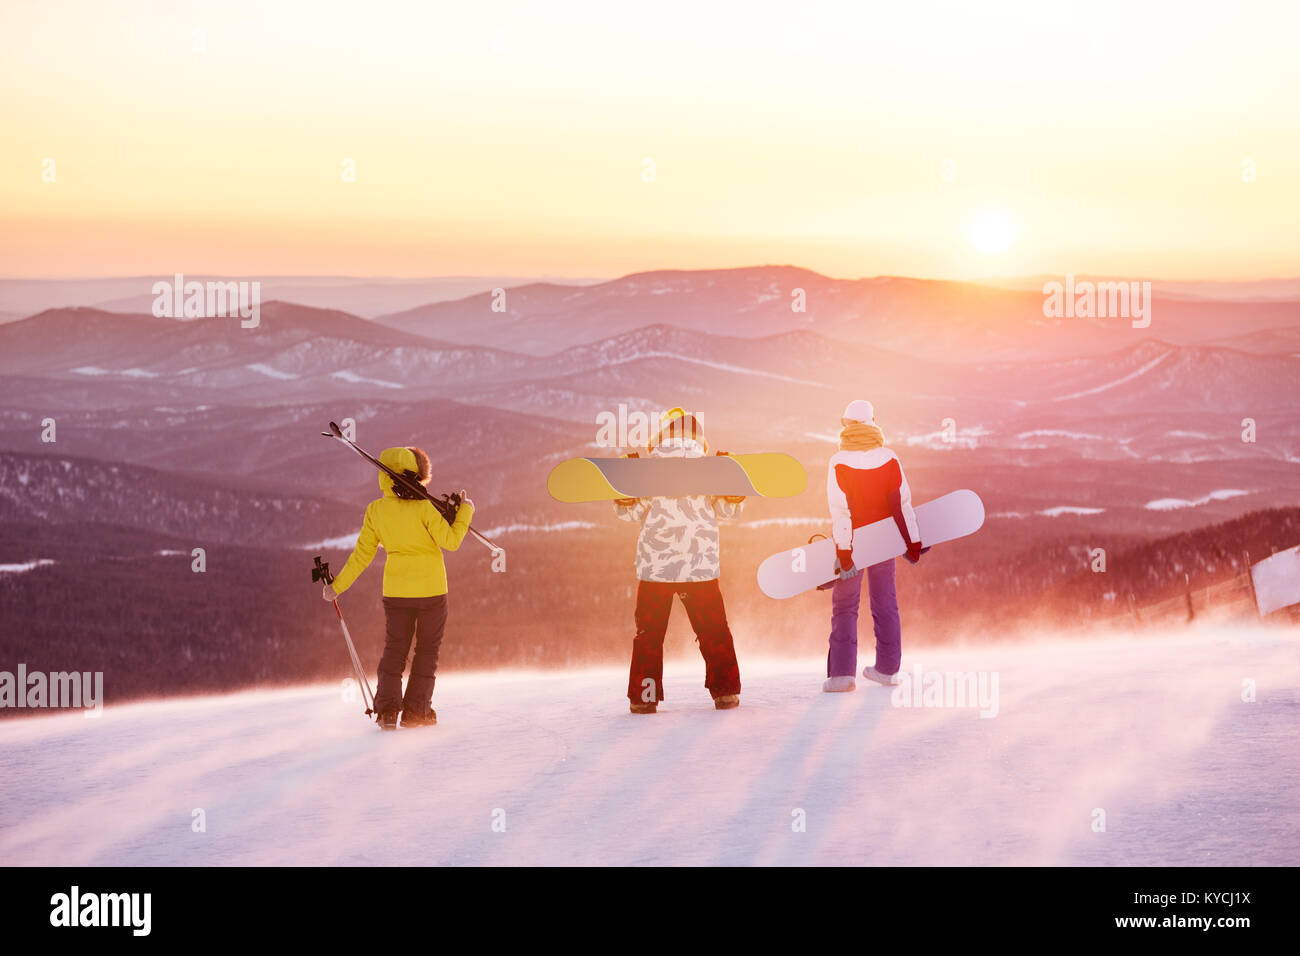 Friends at ski resort against sunset Stock Photo